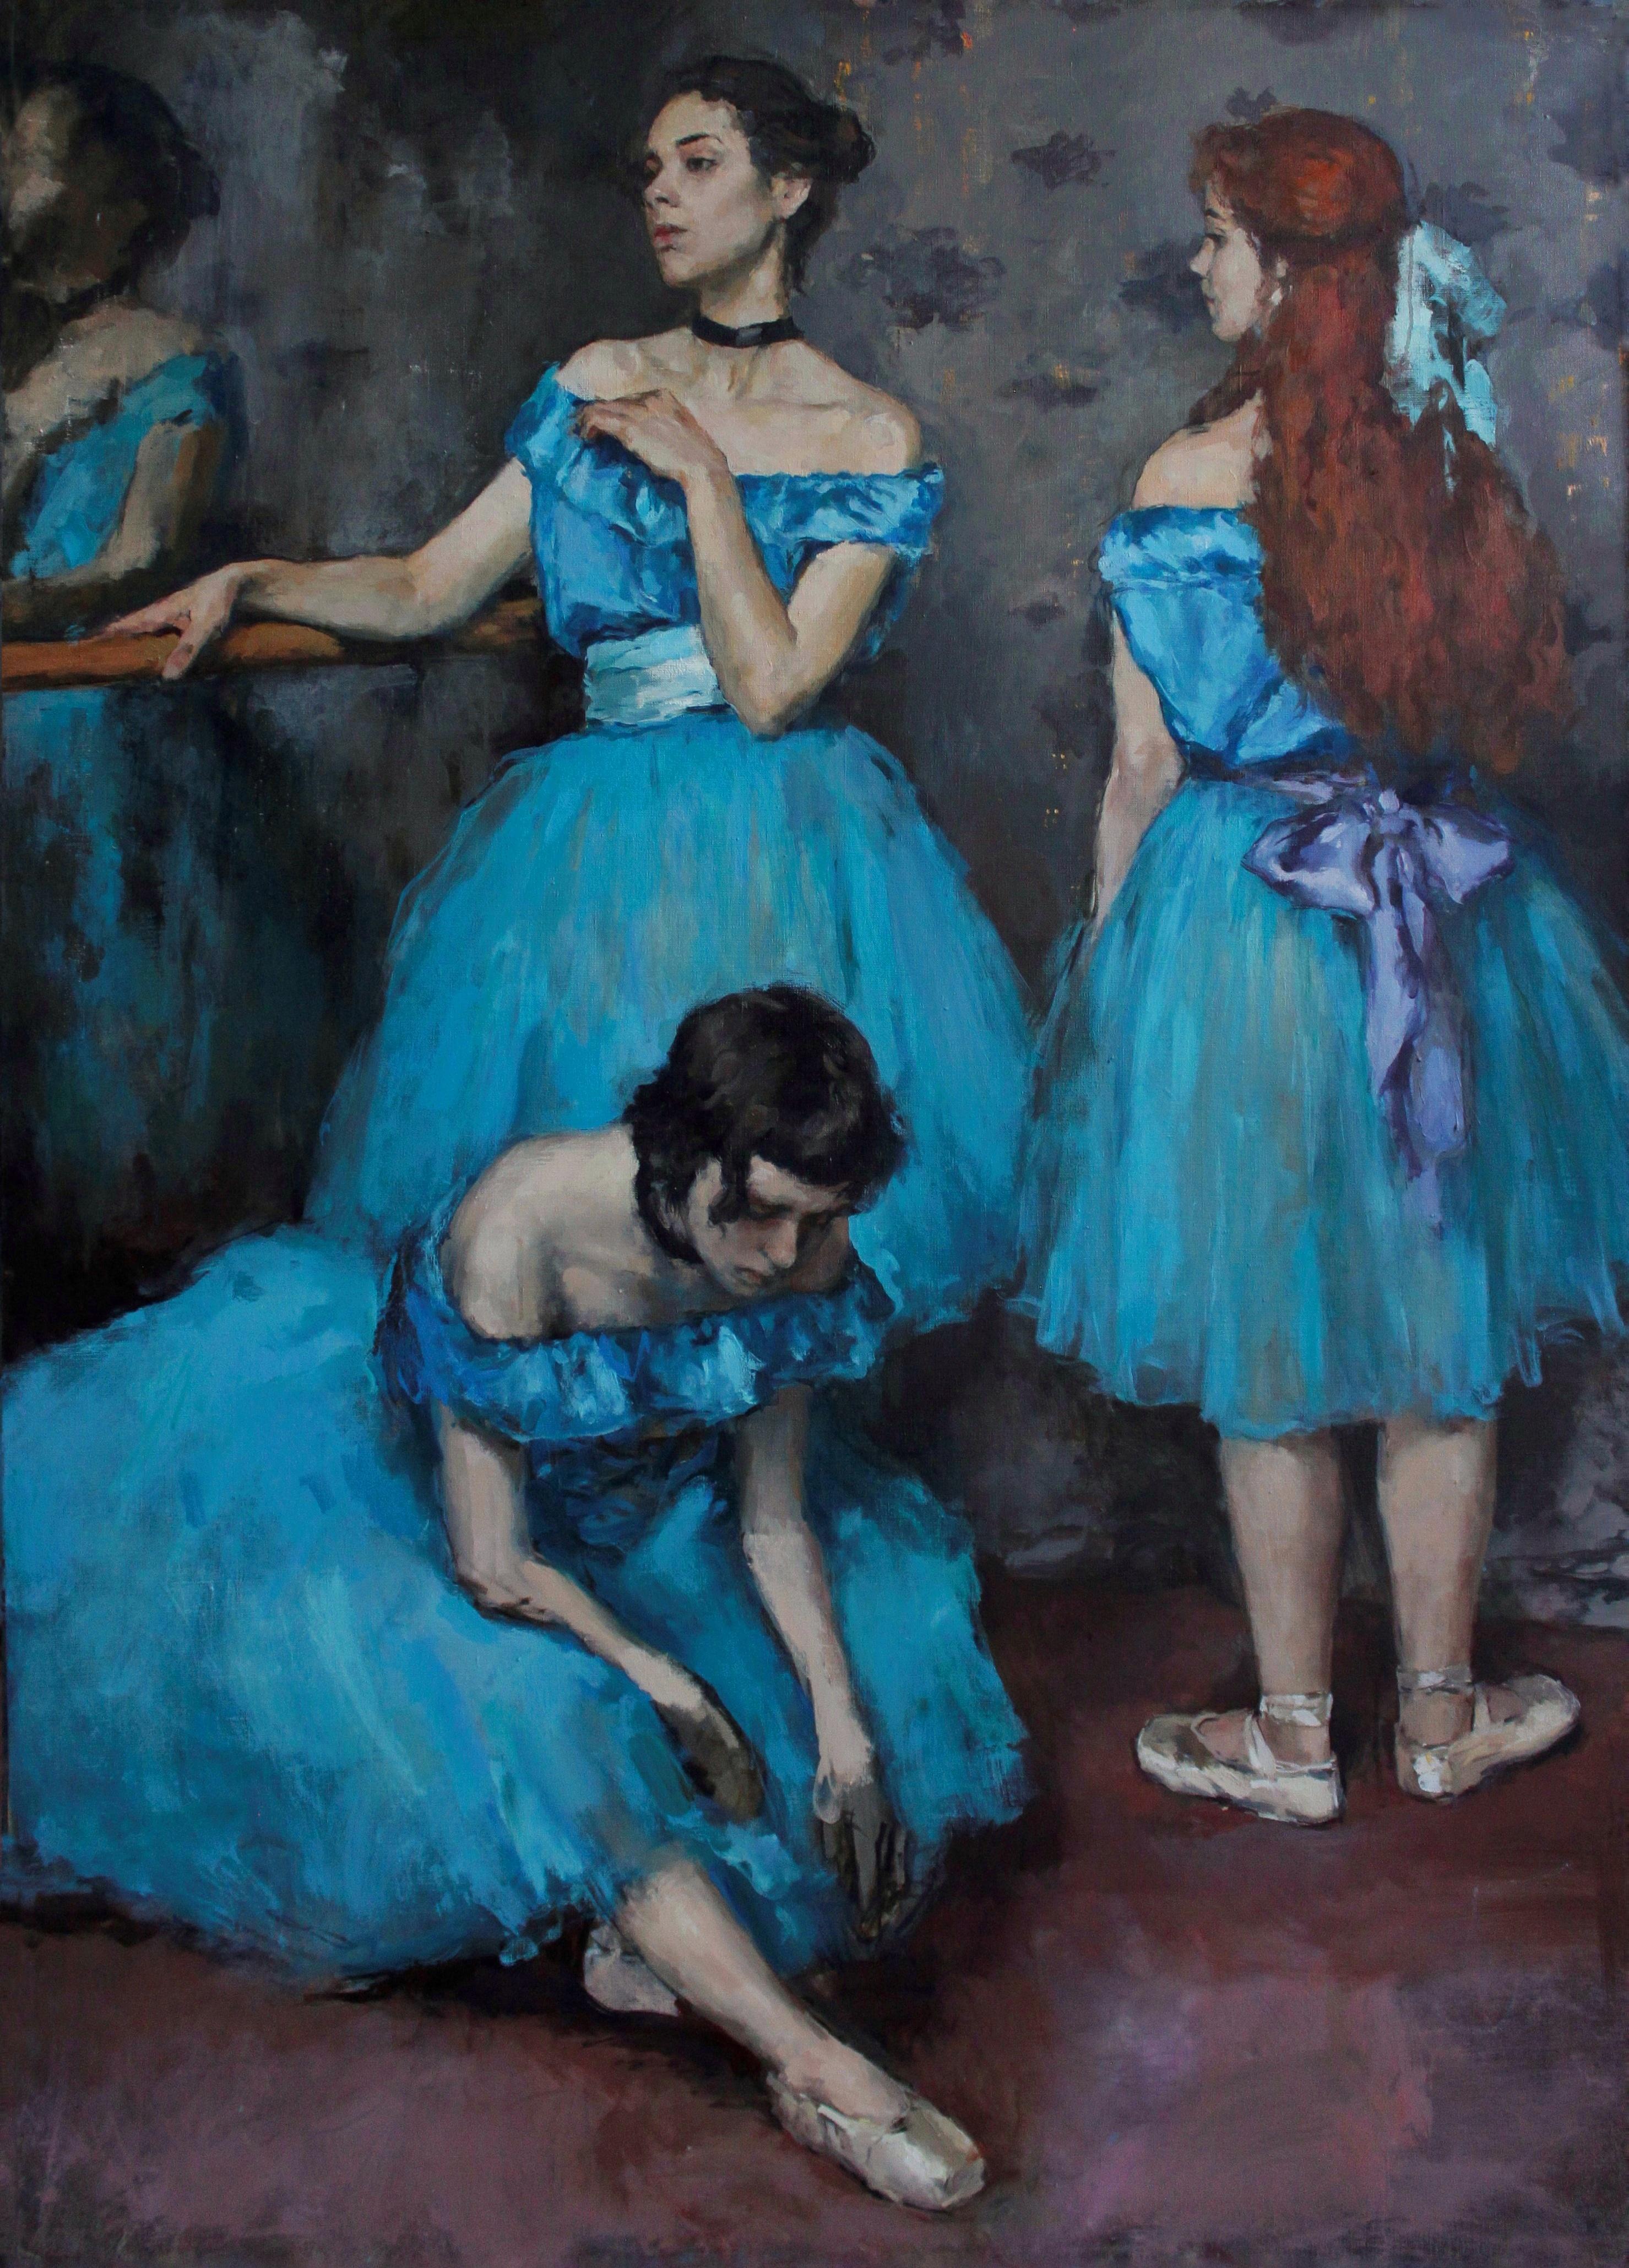 Andrew Piankovski Portrait Painting - Ballerinas in Blue Tutus - 21st Century Contemporary Realism Oil Painting